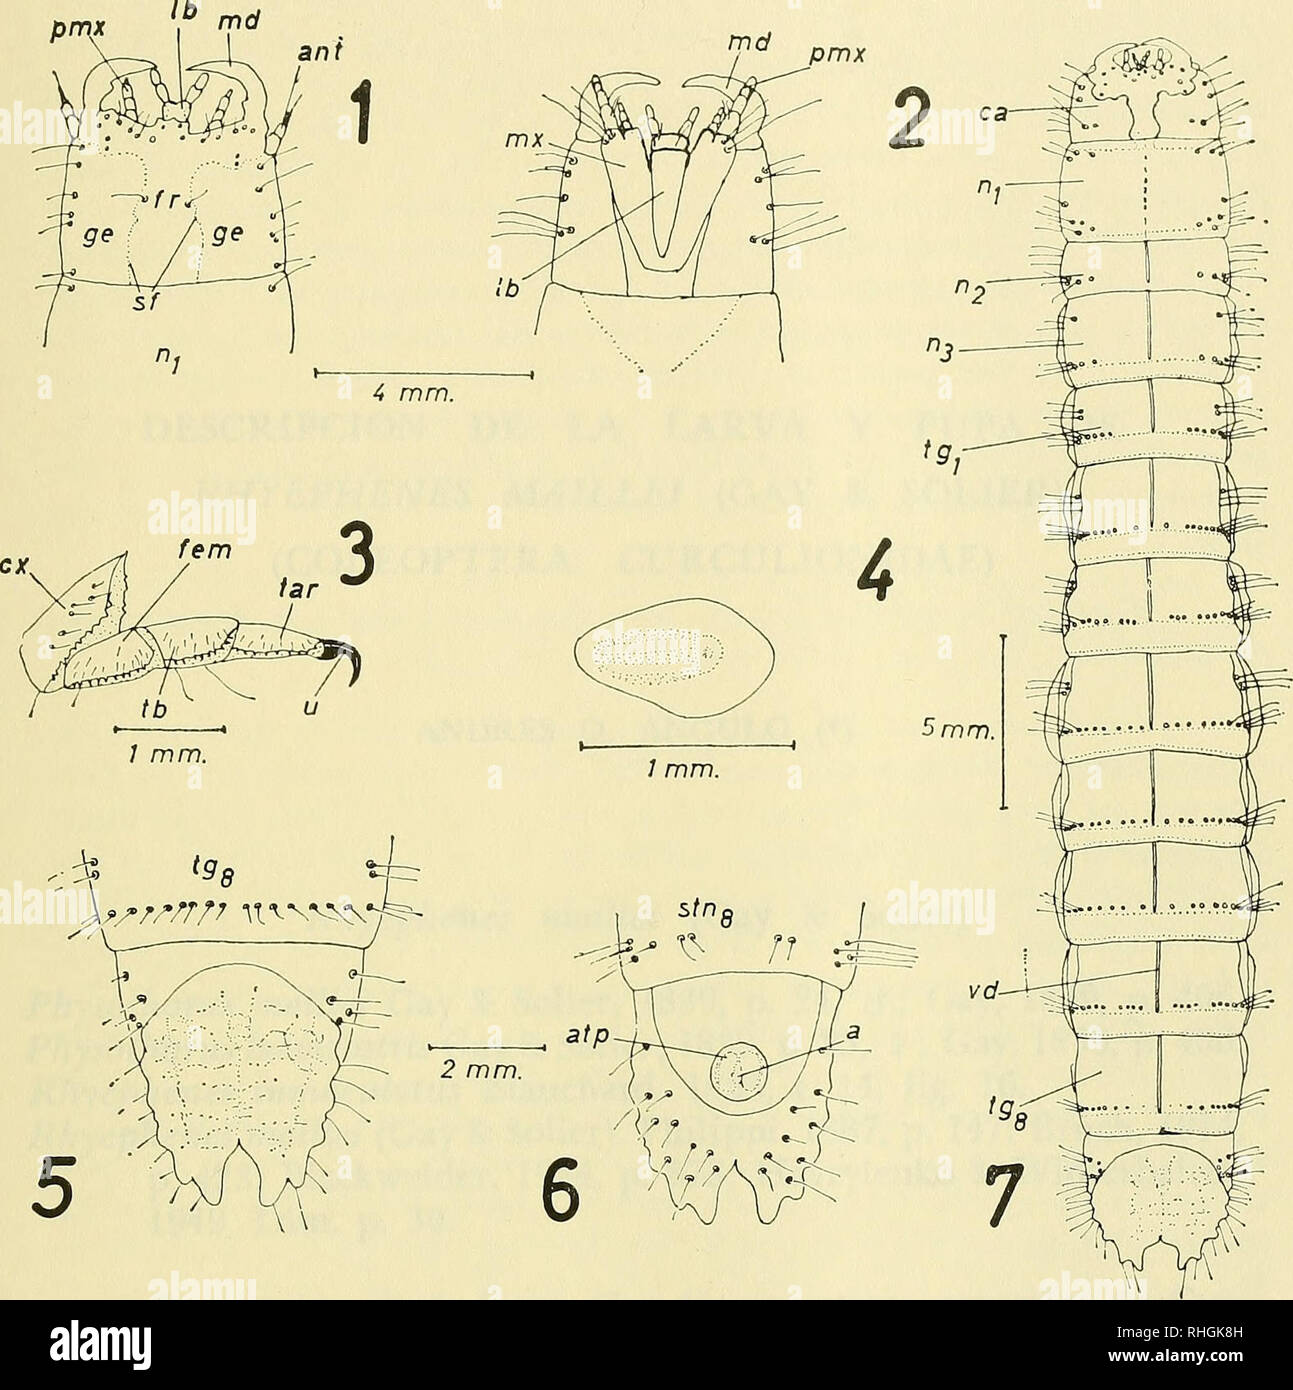 . Boletin de la Sociedad de Biología de Concepción. Sociedad de Biología de Concepción; Biology; Biology. Tibionema abdominalis (Guerin), 1839. Fig. 1.— Cabeza en vista dorsal; Fig. 2 — Cabeza en vista ventral; Fig. 3.— Primera pata anterior derecha; Fig. 4.— Primer espiráculo abdominal; Fig. 5.— 99 (último) segmento abdominal en vista dorsal; Fig. 6.— 99 (último) segmento abdominal en vista ventral; Fig. 7.— Larva en vista dorsal, a.— ano; ant.— antena; atp.— ampolla terminal posterior; ca.— cabeza; ex.— Coxa; fem.— fémur; fr.— frente; ge.— gena; Ib.— labium; md.— mandíbula; mx.— maxila; n.—  Stock Photo